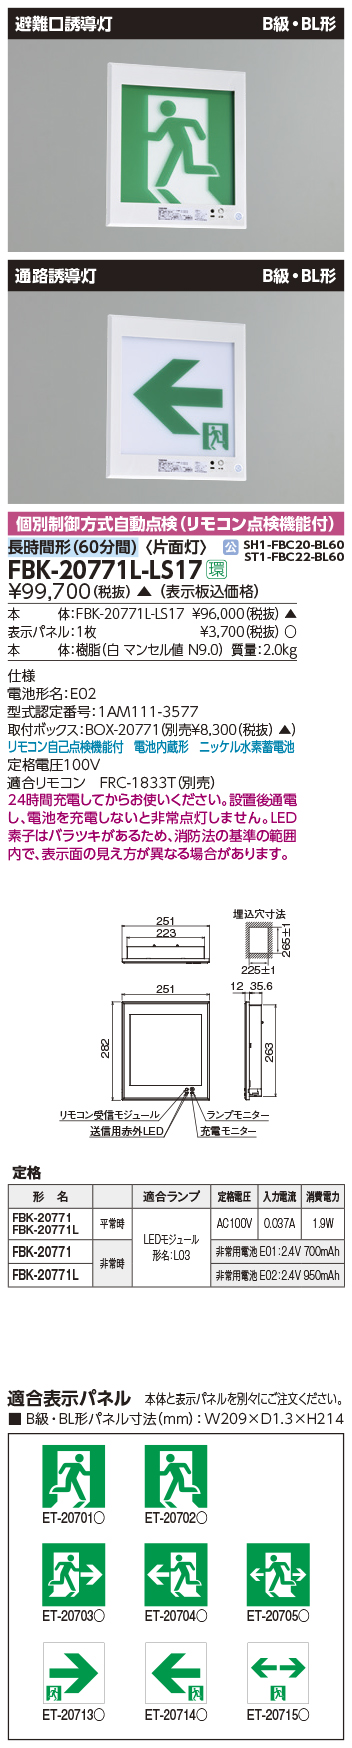 東芝　FBK-20771L-LS17　LED誘導灯(壁埋込形) 片面灯 B級・BL形 個別制御方式自動点検(リモコン点検機能付) ※本体のみ 表示パネル別売 受注生産品 [§] - 4